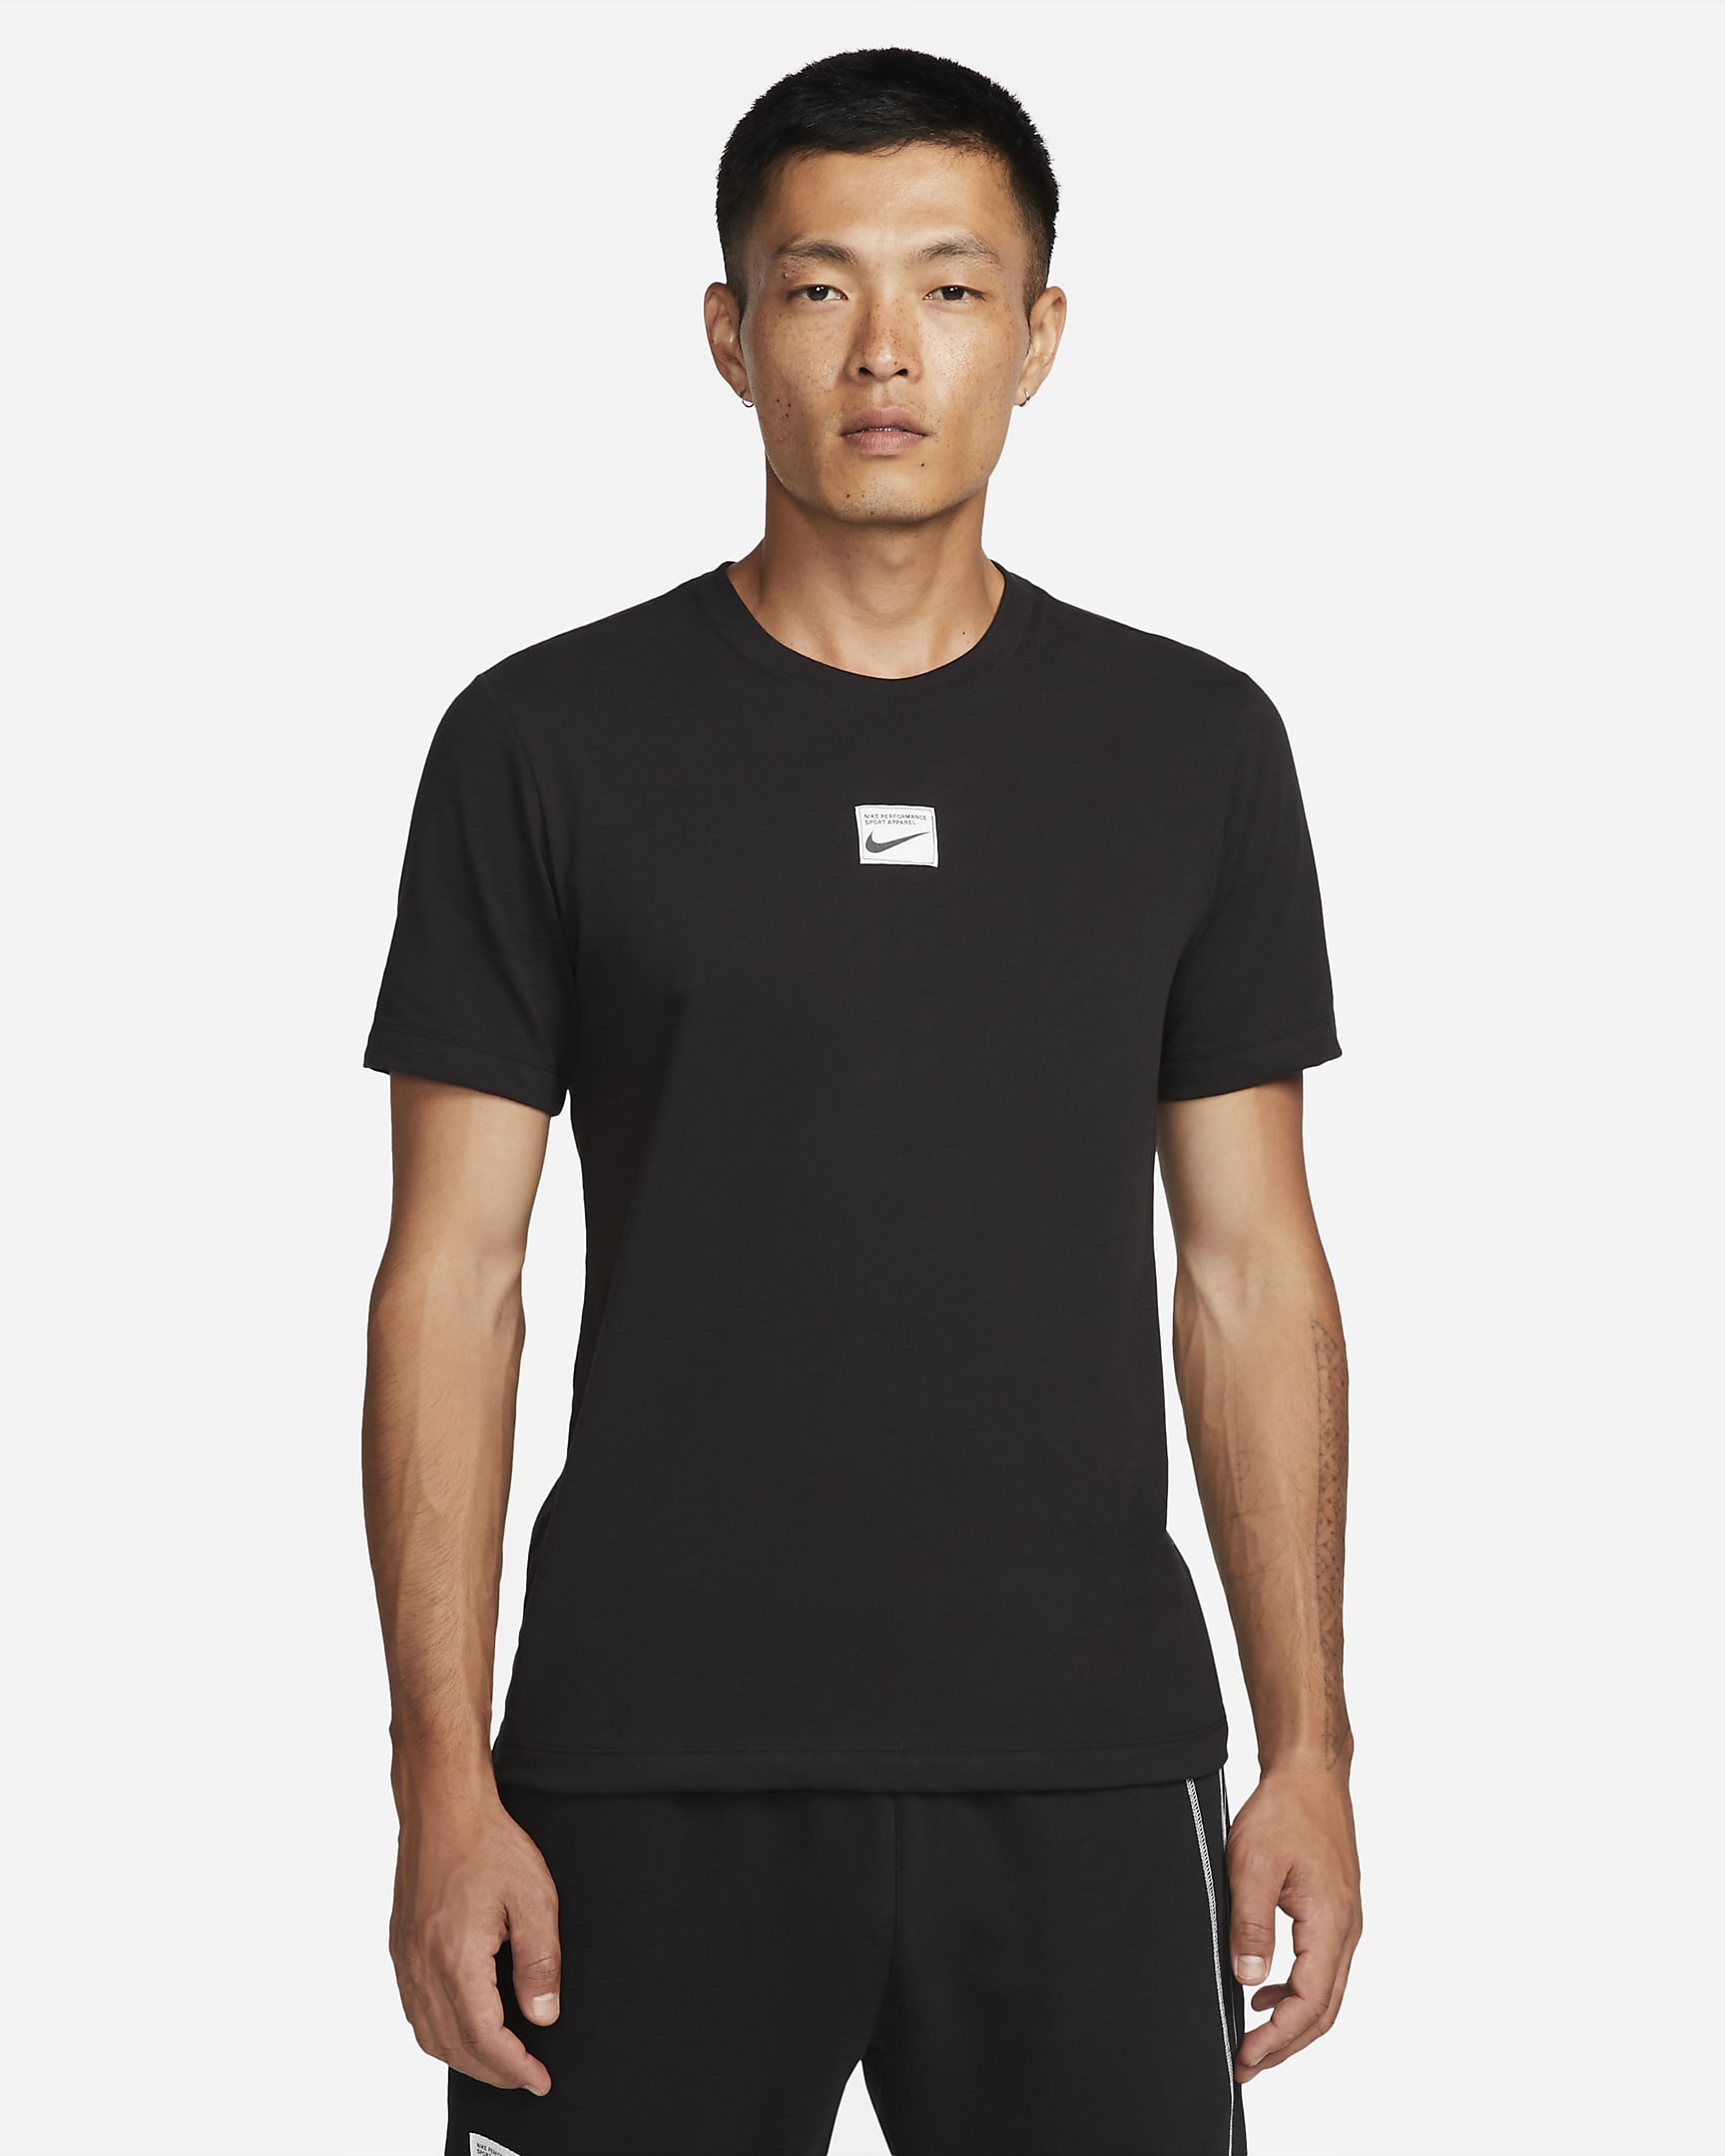 Nike Dri-FIT Men's Fitness T-Shirt. Nike MY